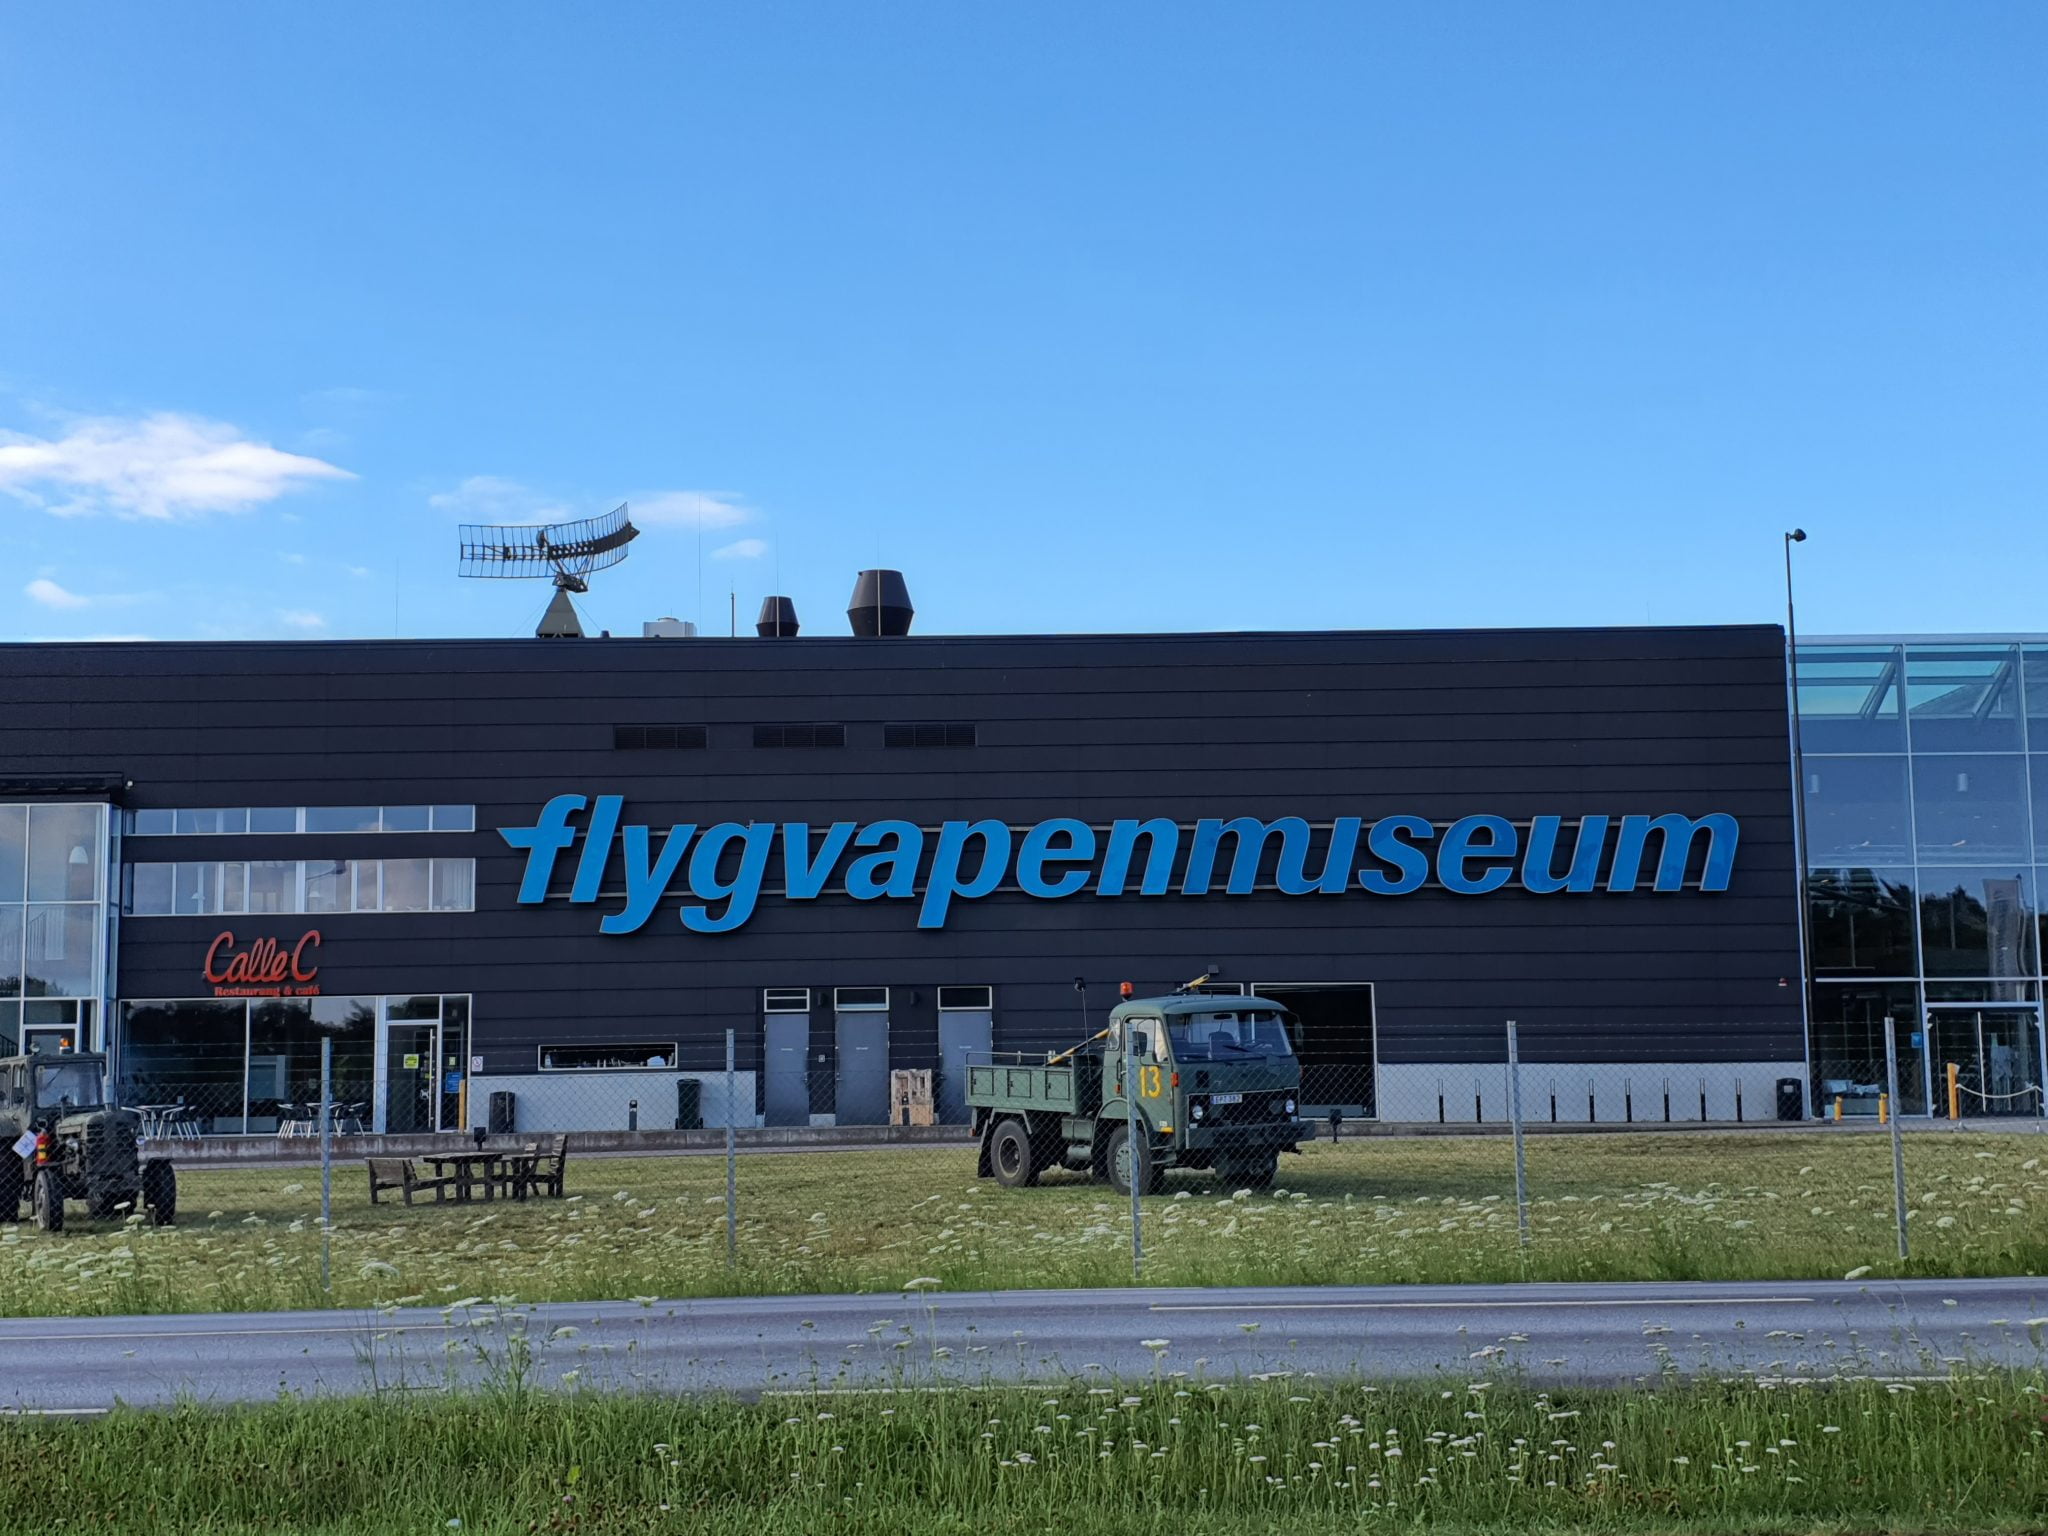 Air Force Museum in Linköping